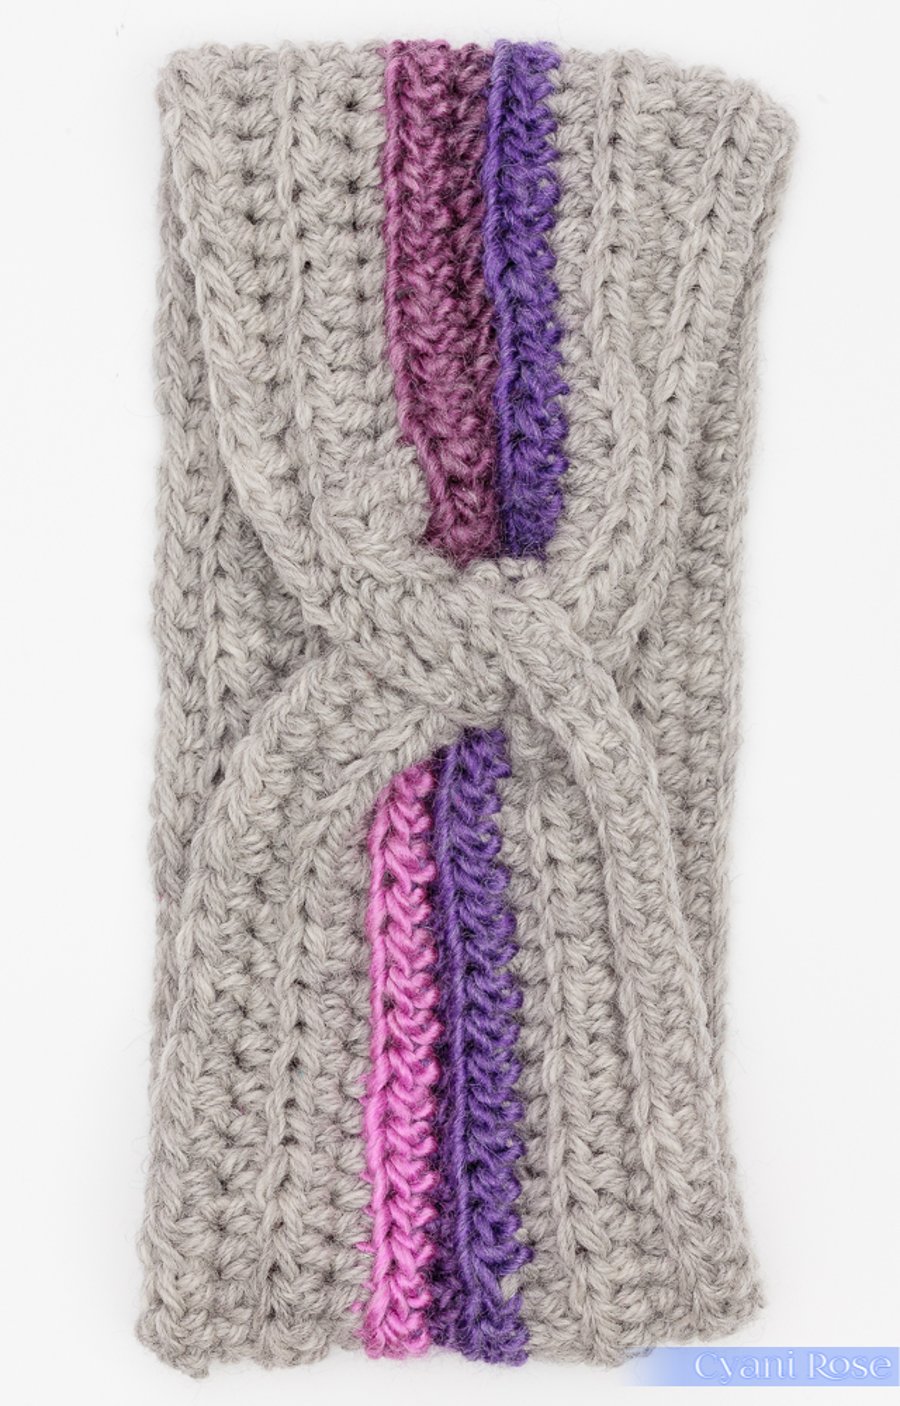 Crochet earwarmer headband chunky  grey pink purple handmade